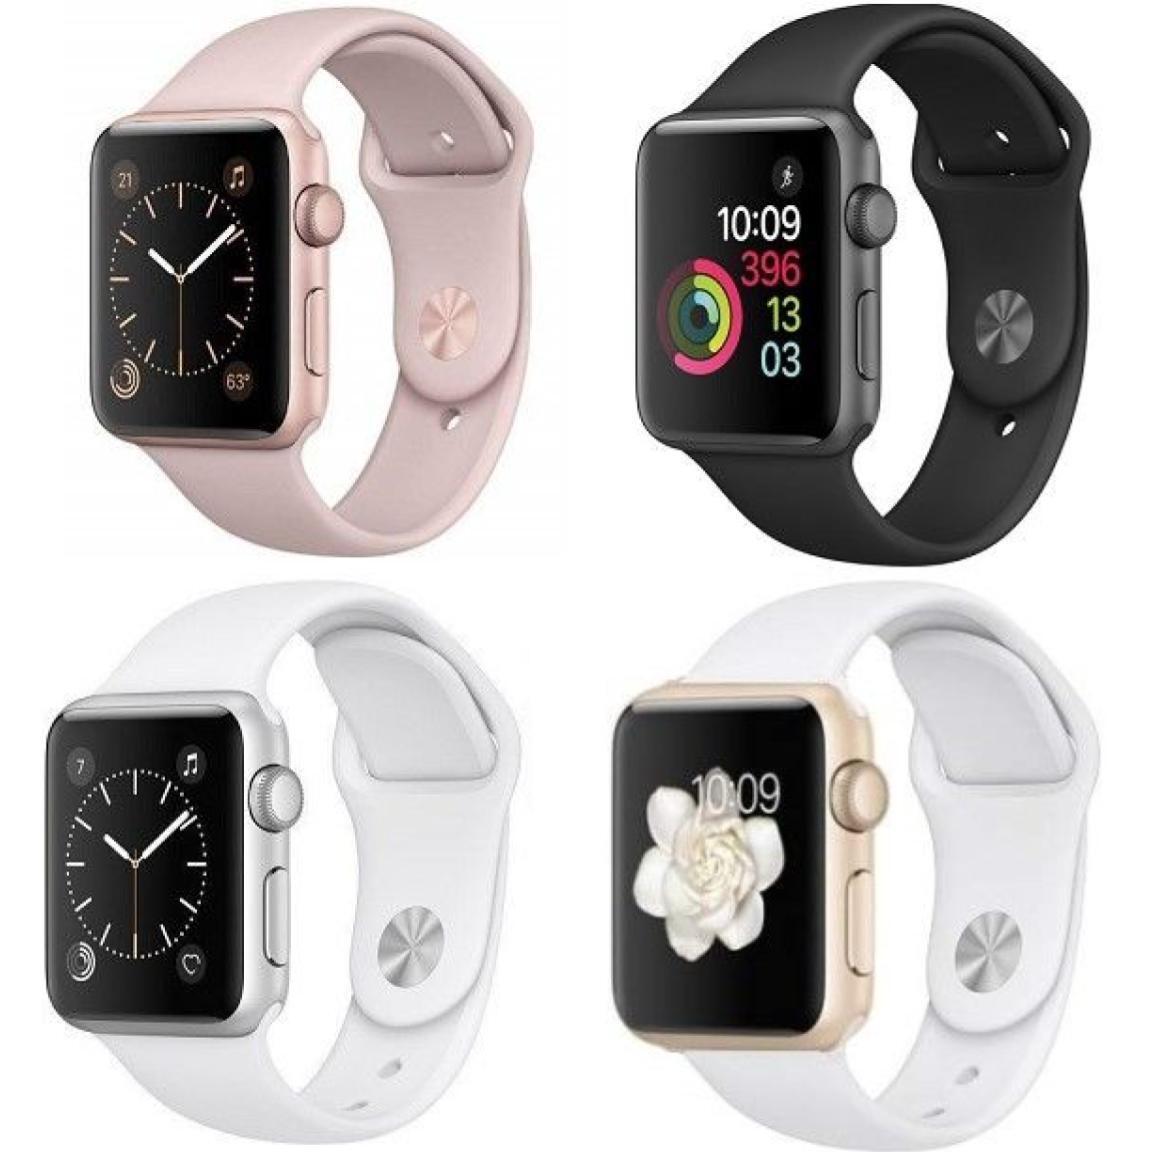 Apple Watch Series 2 - 38mm/42mm - Aluminum Case - All Colors - Smartwatch